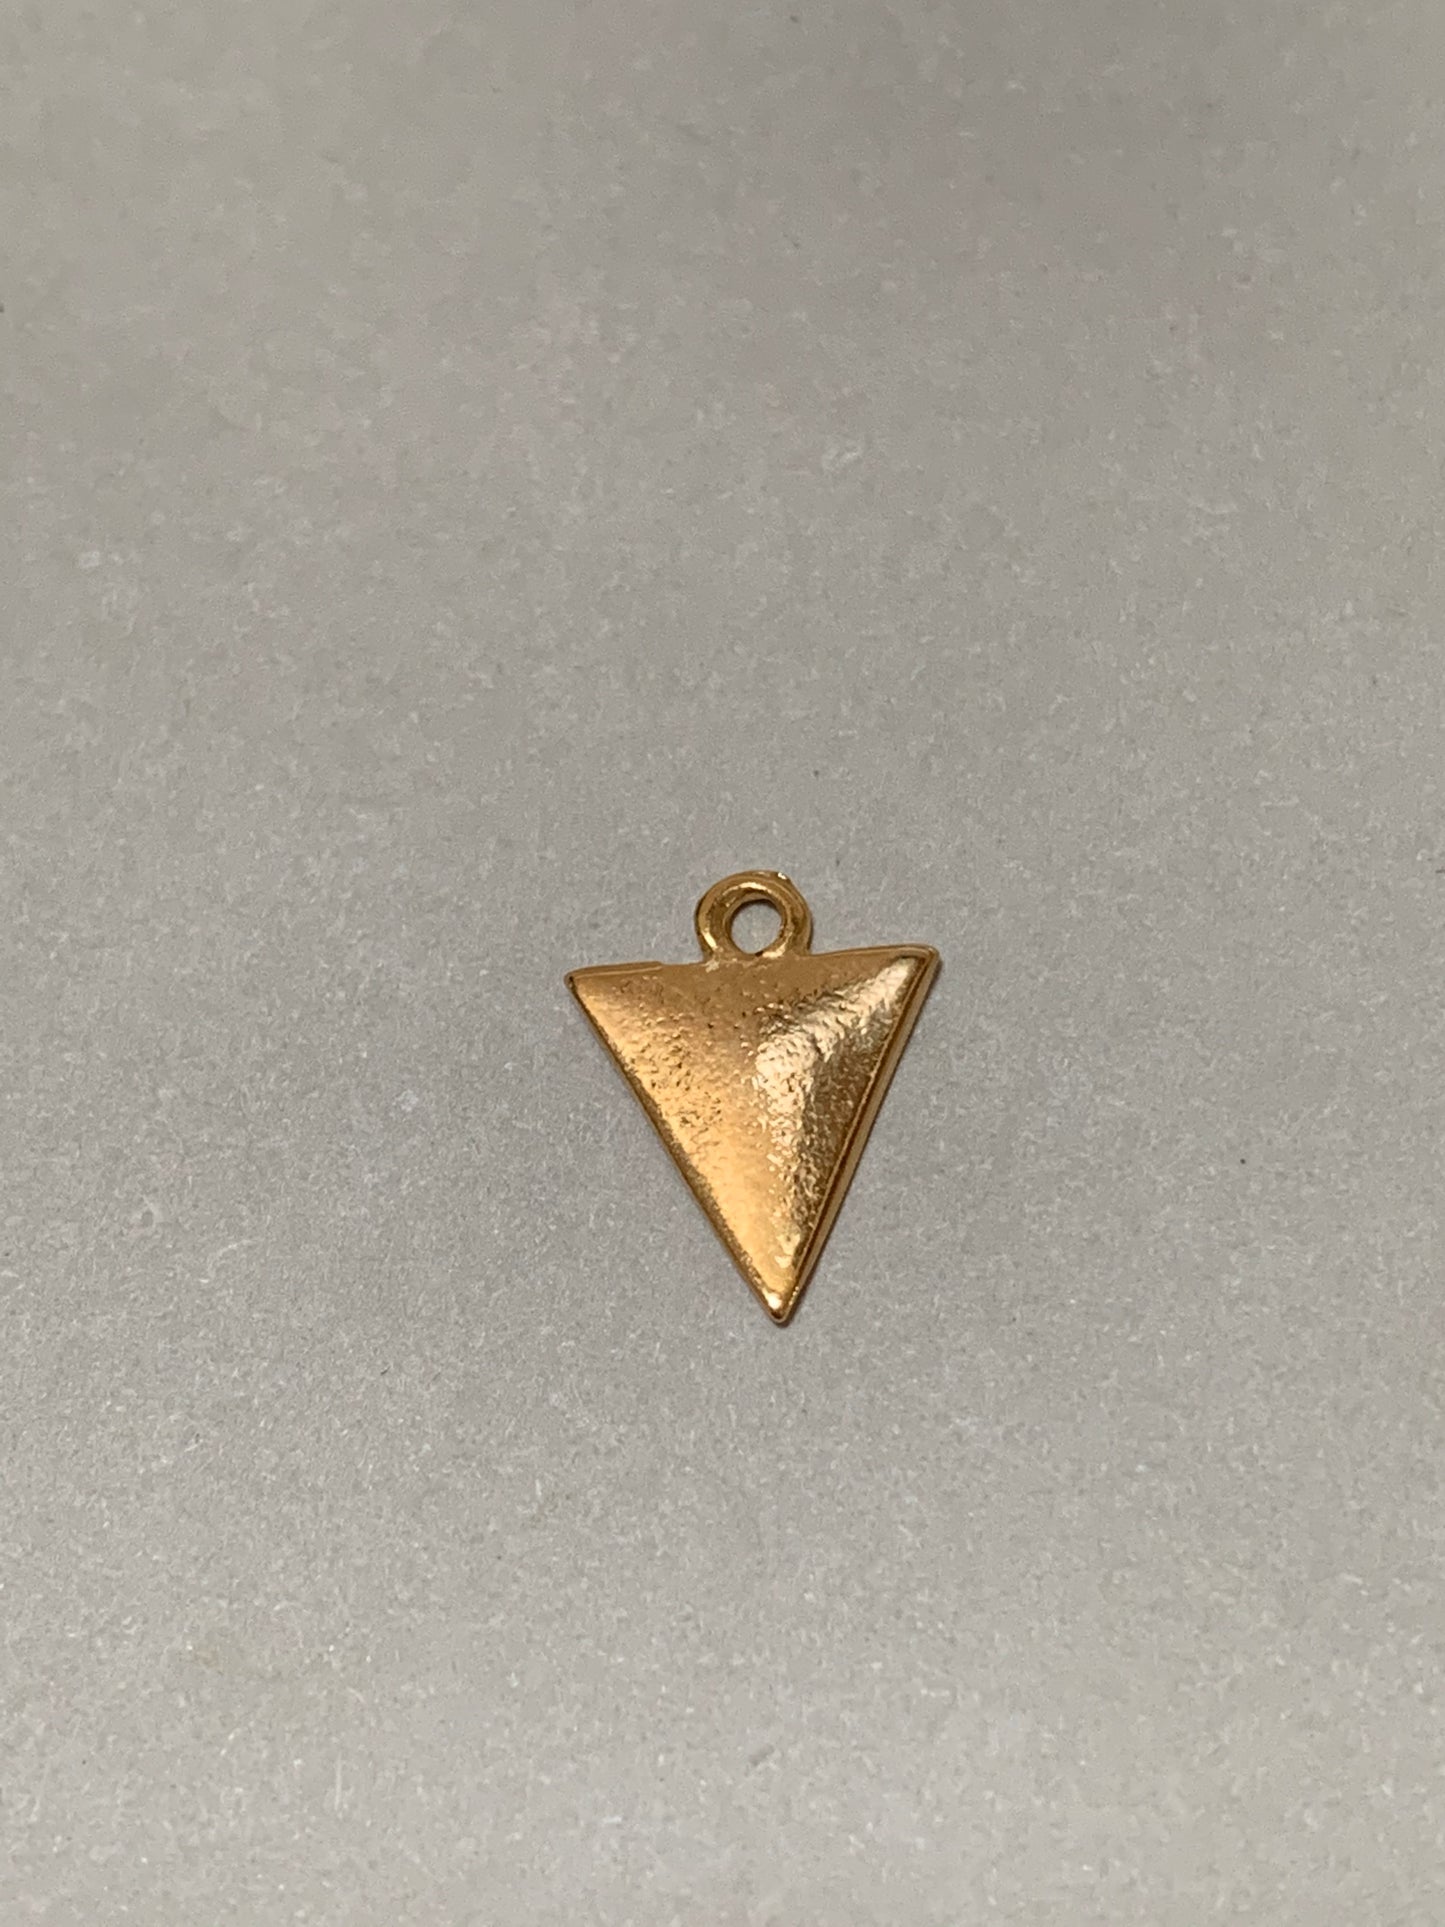 15mm Triangle Gold / Triangle-16216